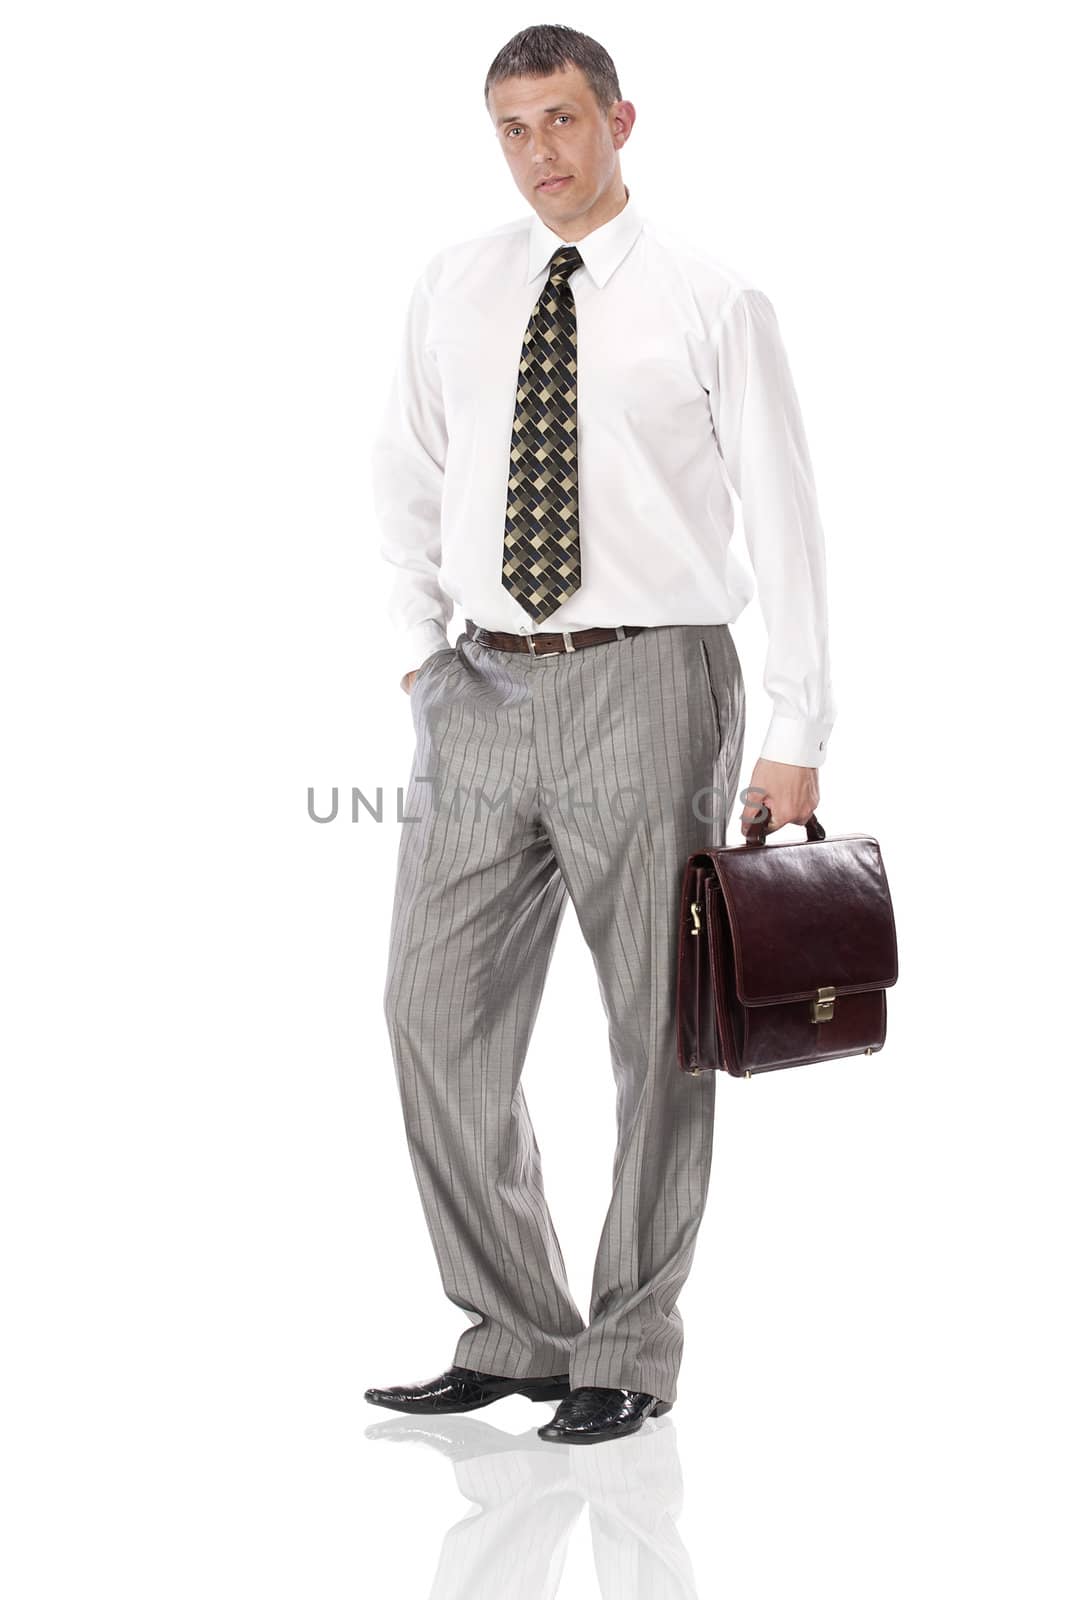 The elegant  businessman  on a white background